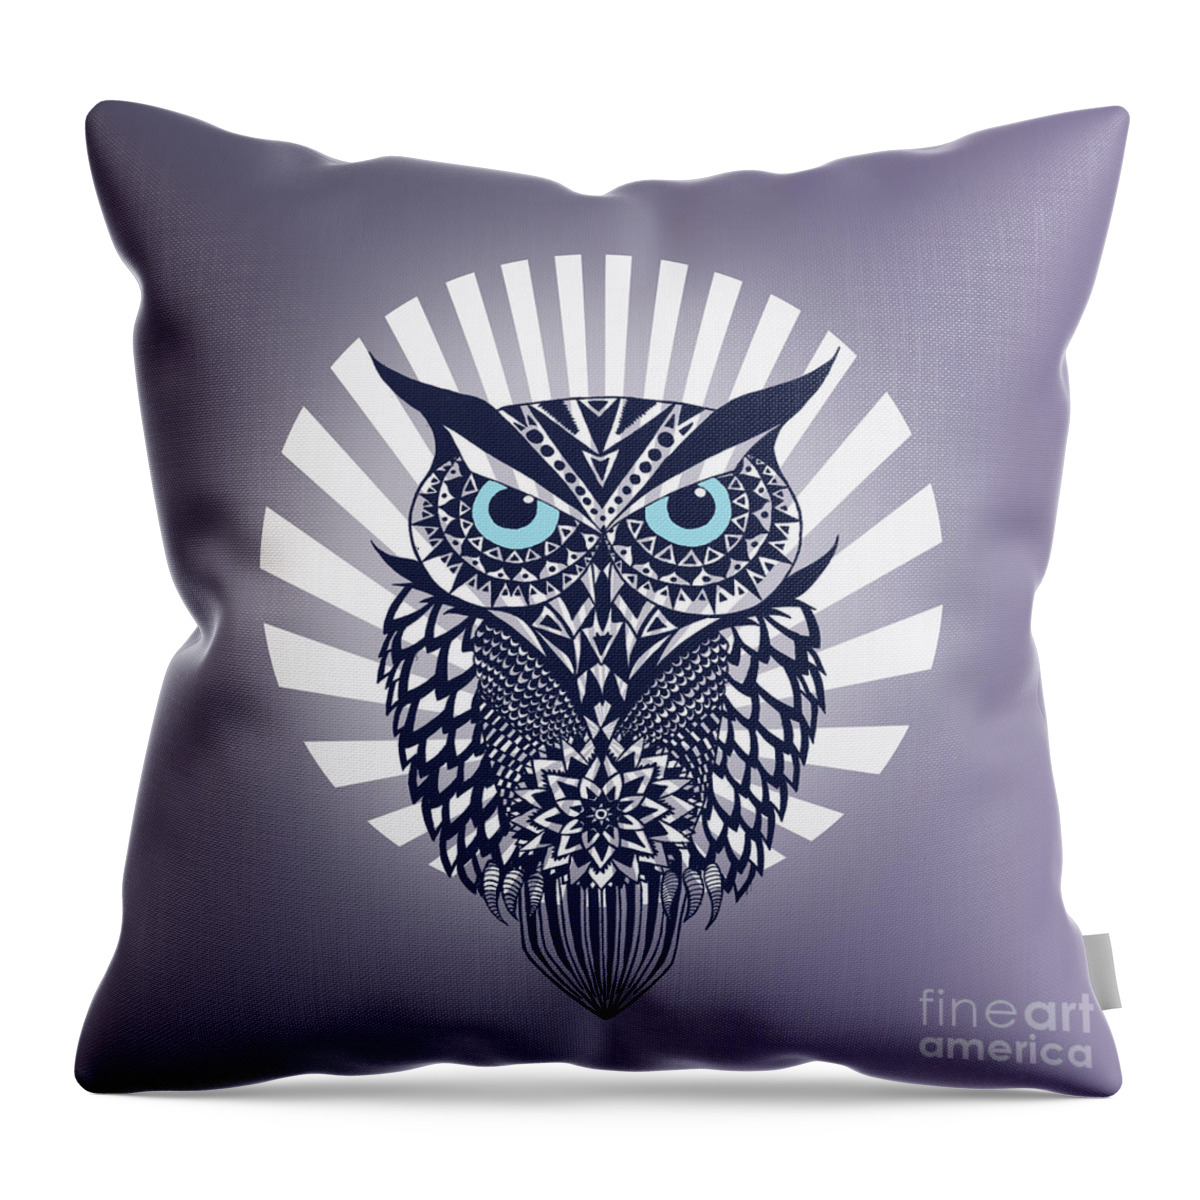 Owl Throw Pillow featuring the digital art Owl by Mark Ashkenazi